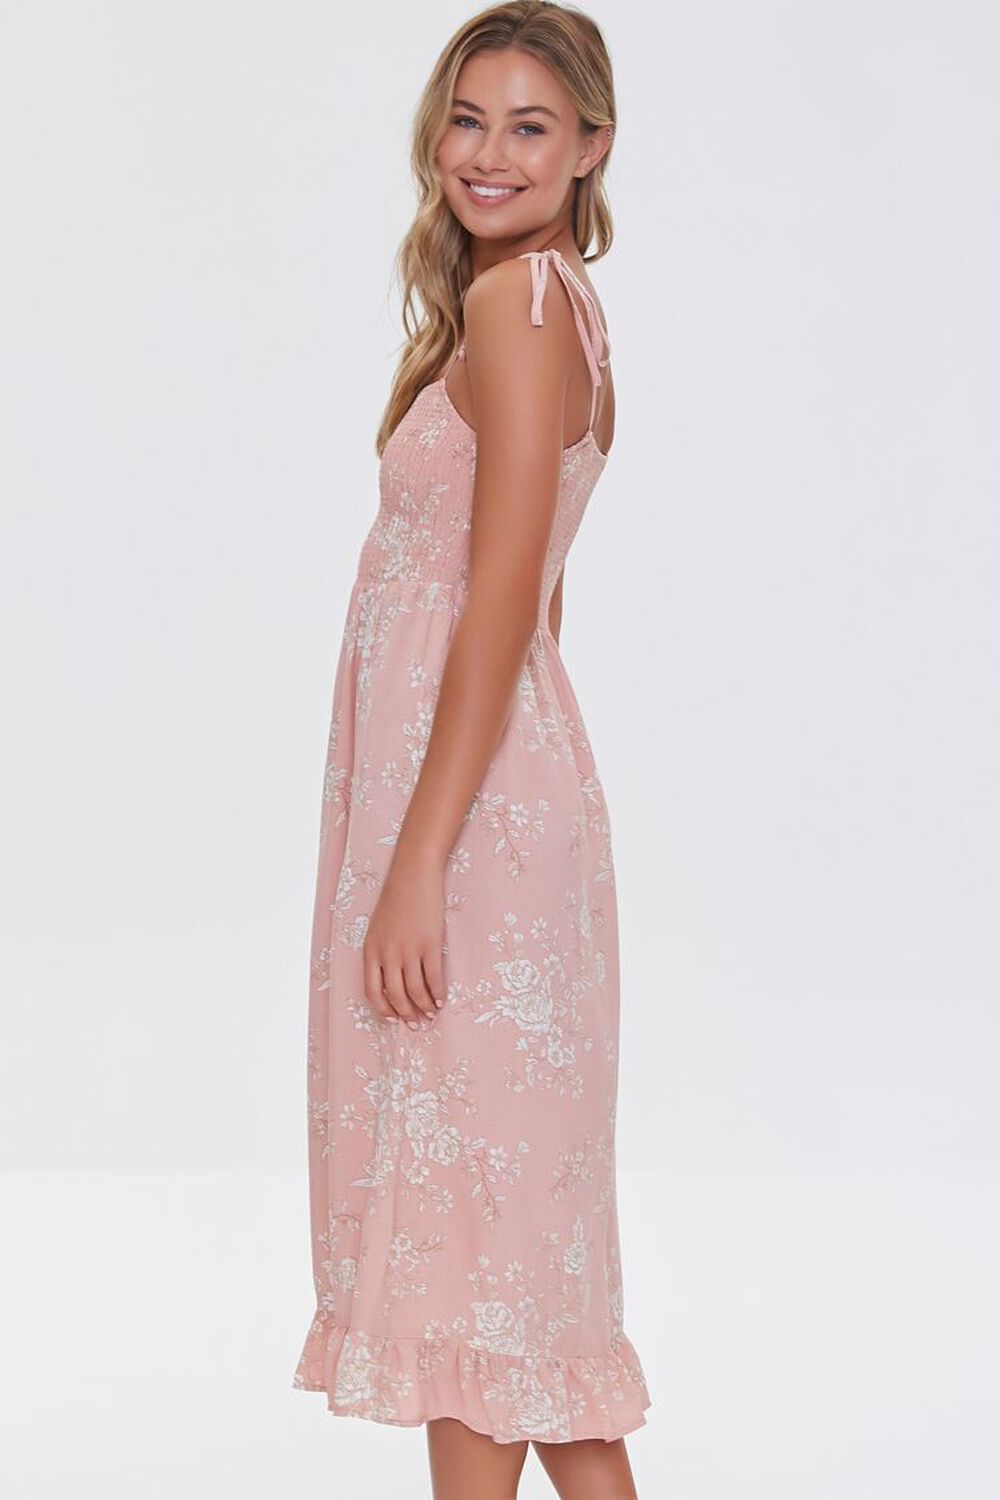 PINK/CREAM Floral Print Midi Dress, image 2